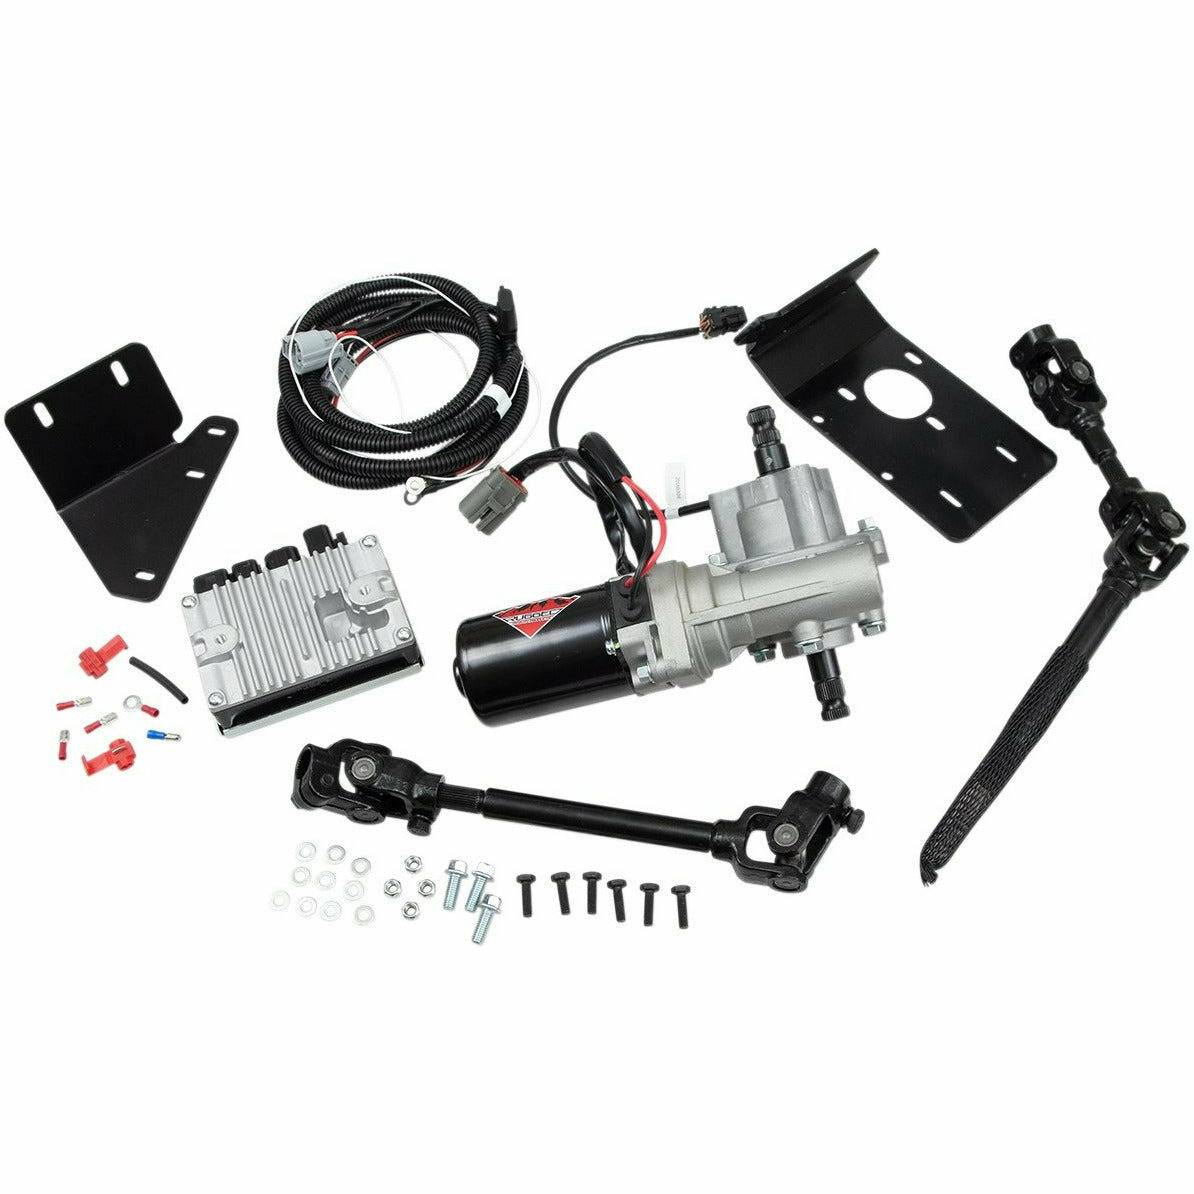 Moose Utility Polaris RZR 570 / 800 Power Steering Kit